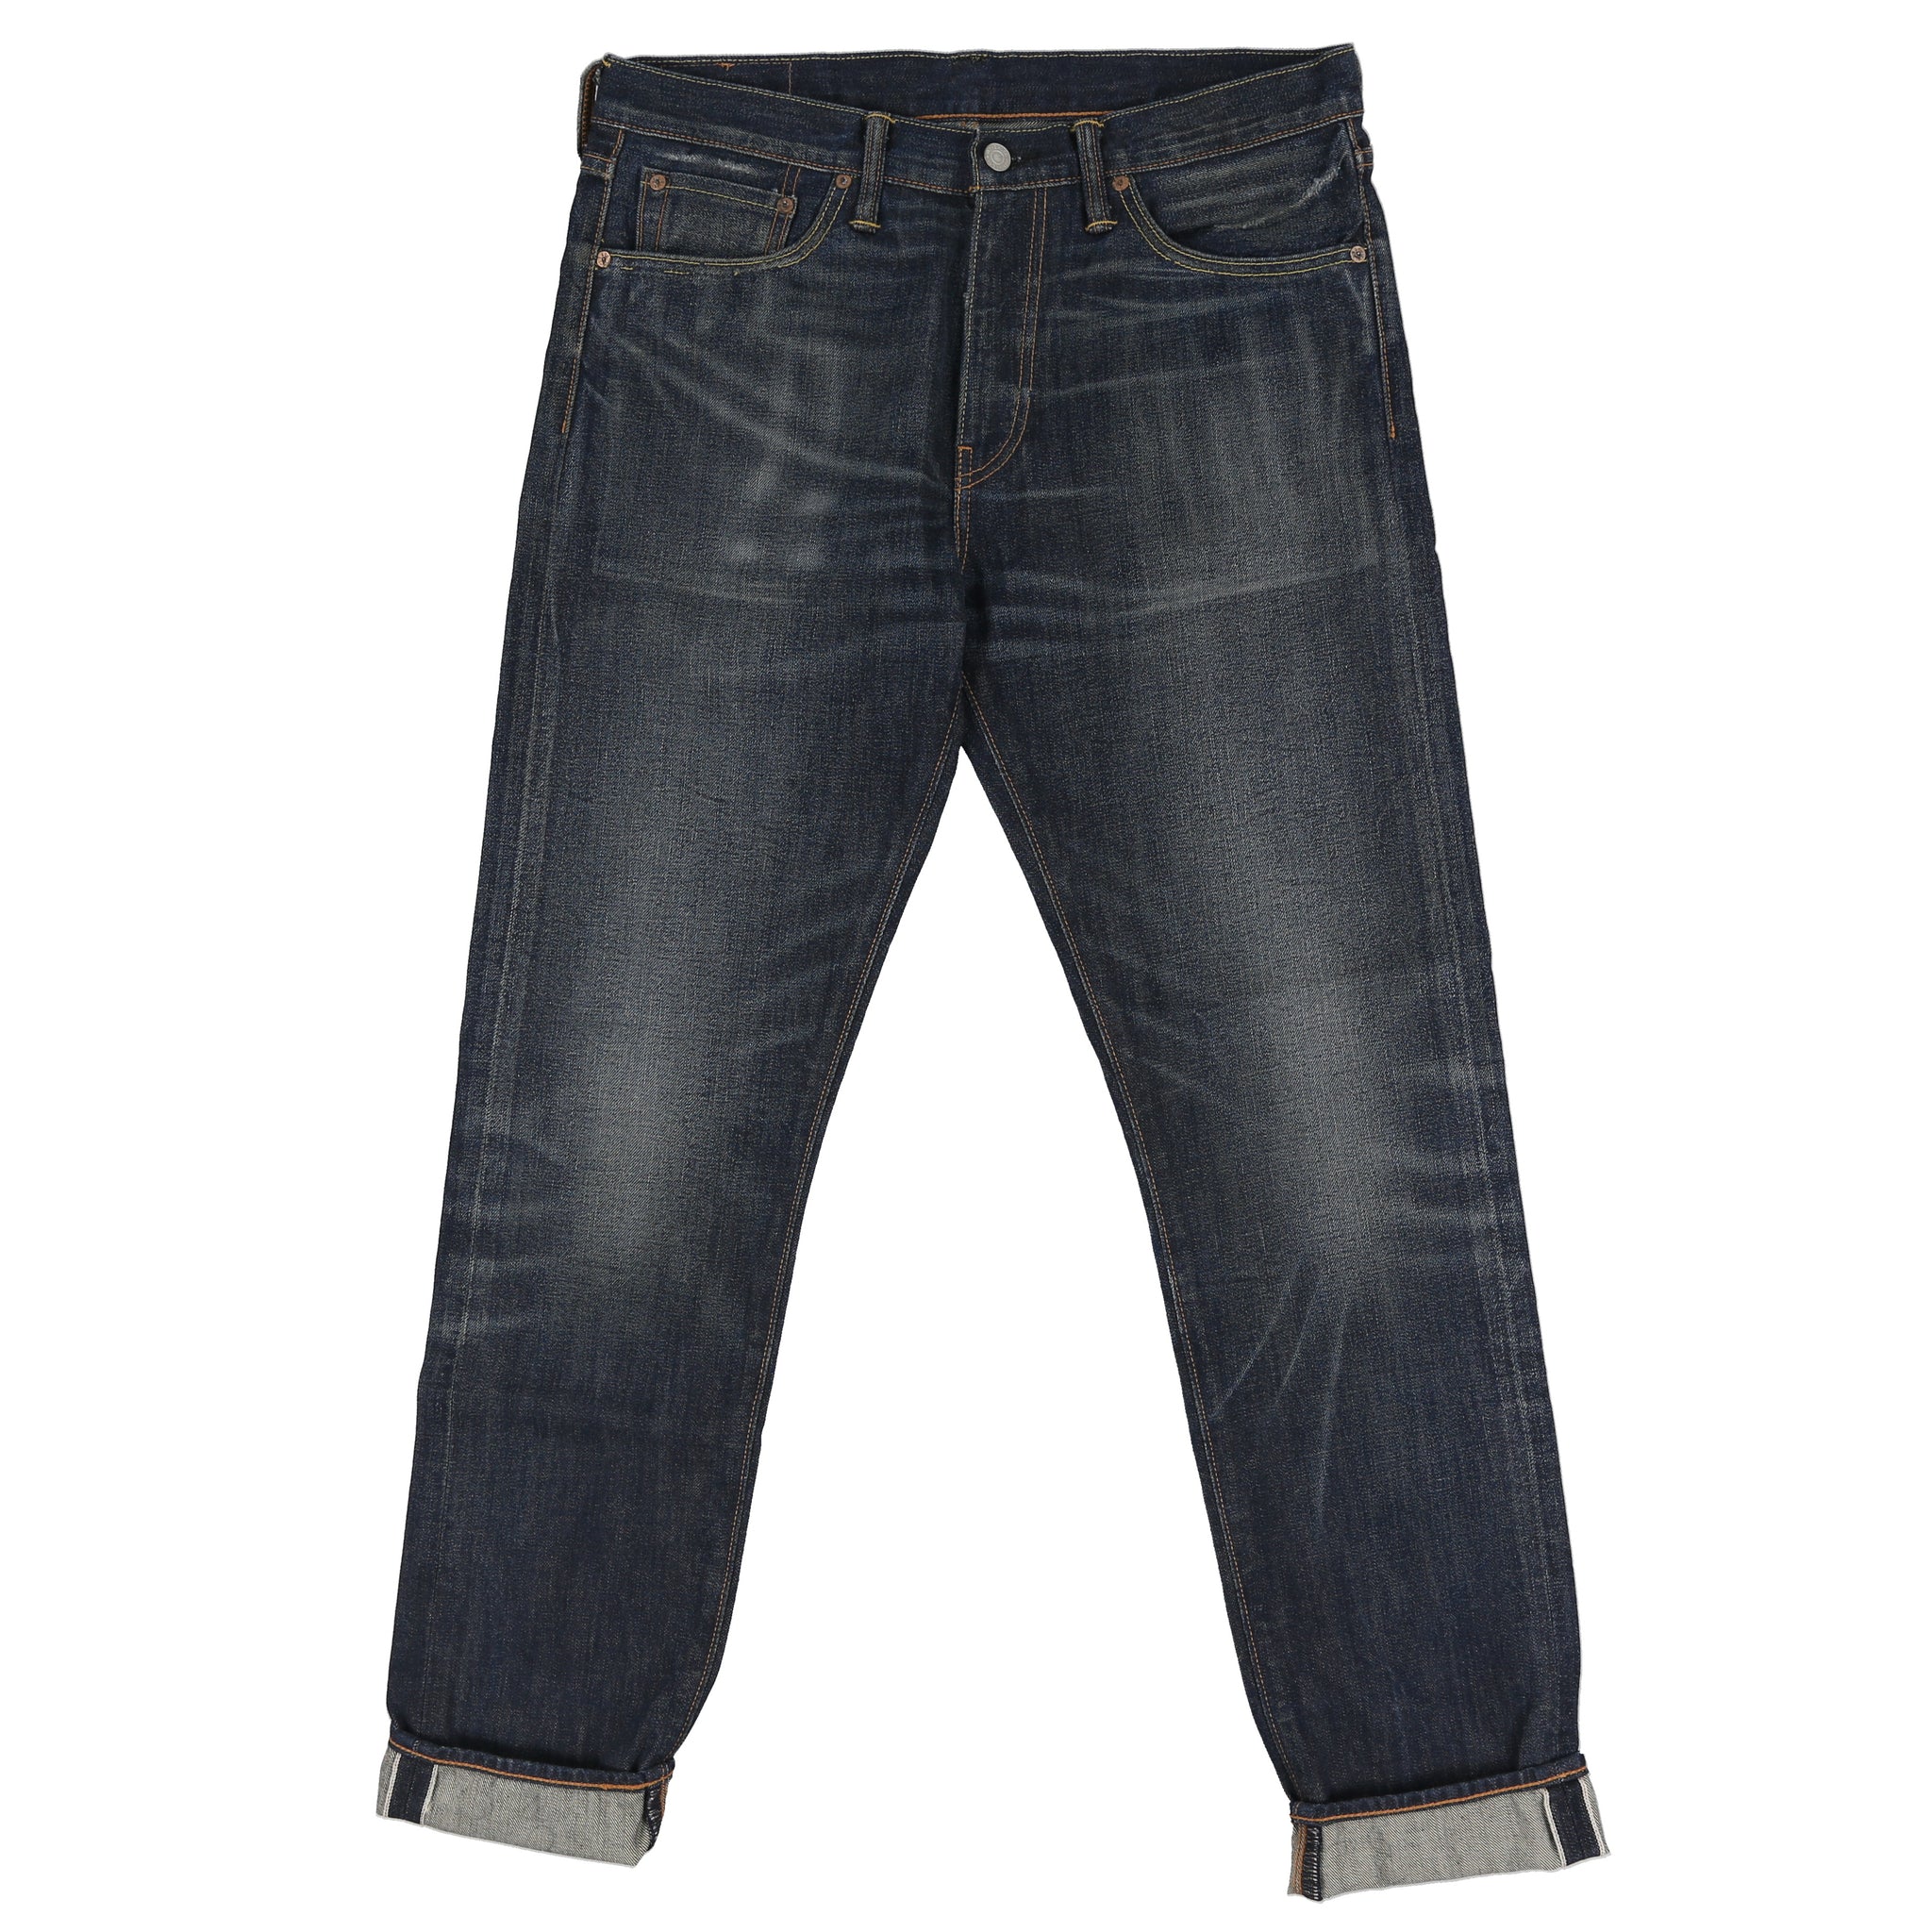 New Levis 508 Distressed Selvedge Denim Jeans